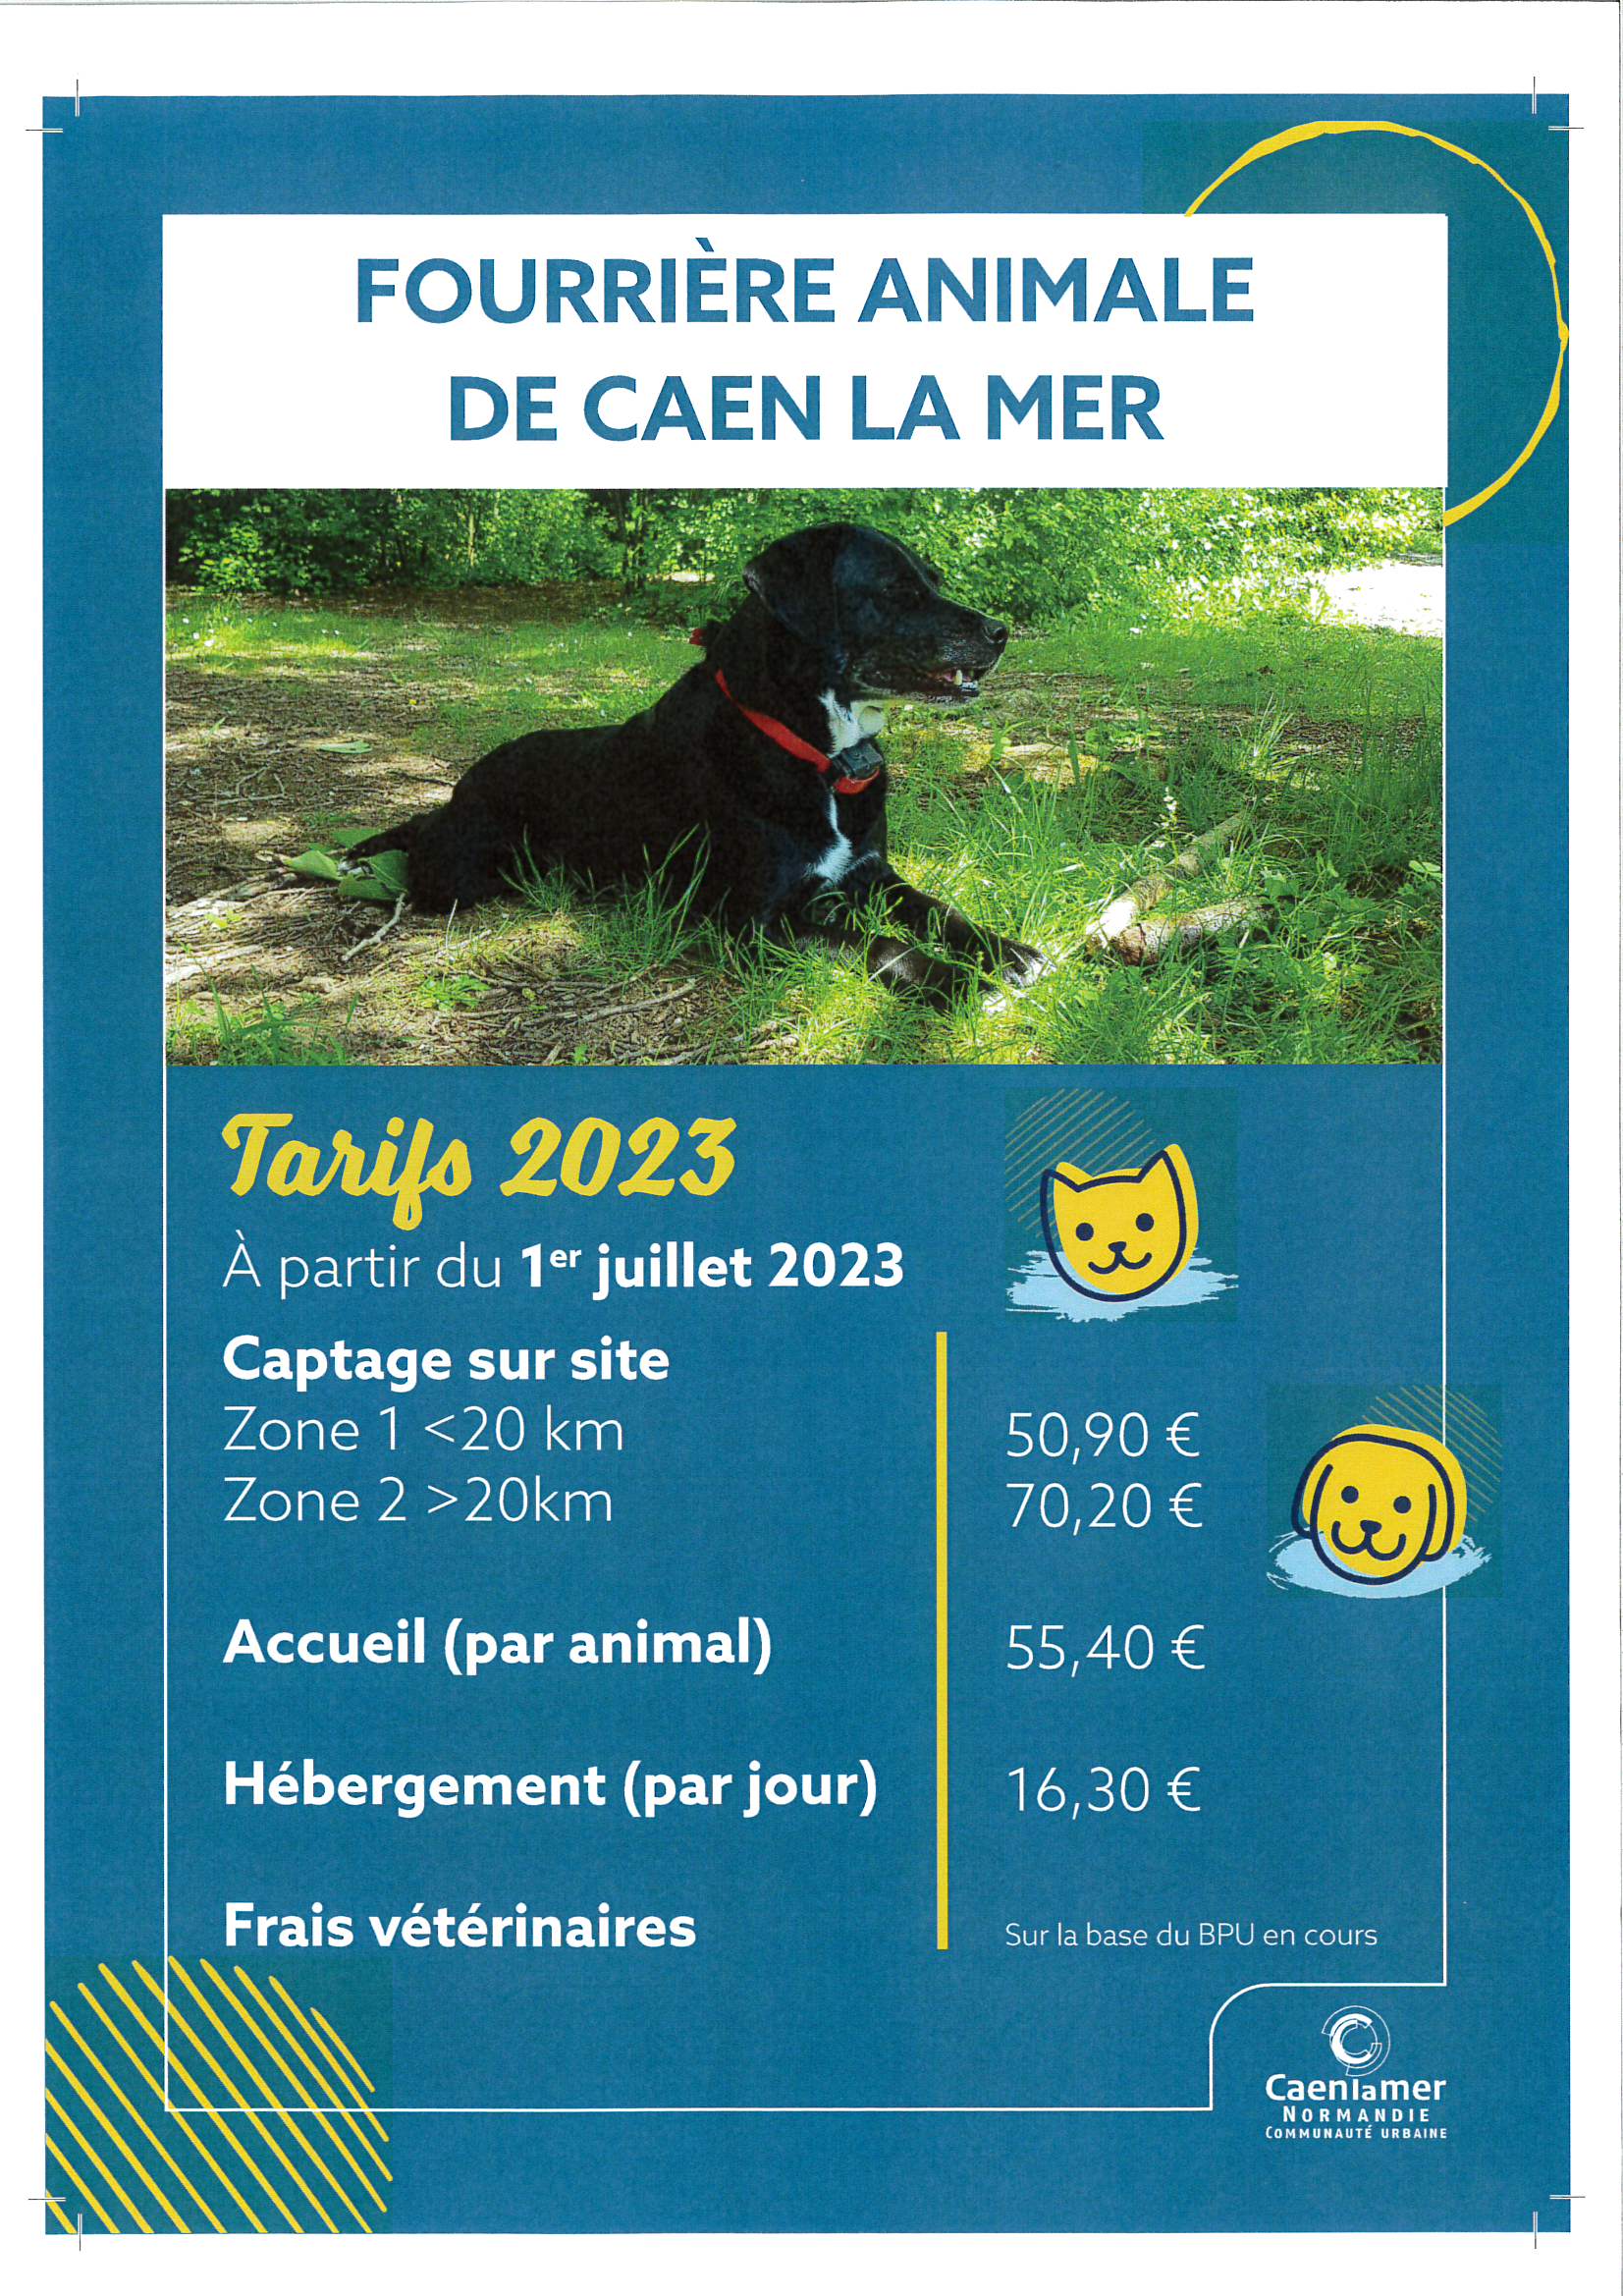 Fourrière Animale Tarifs 2023.jpg